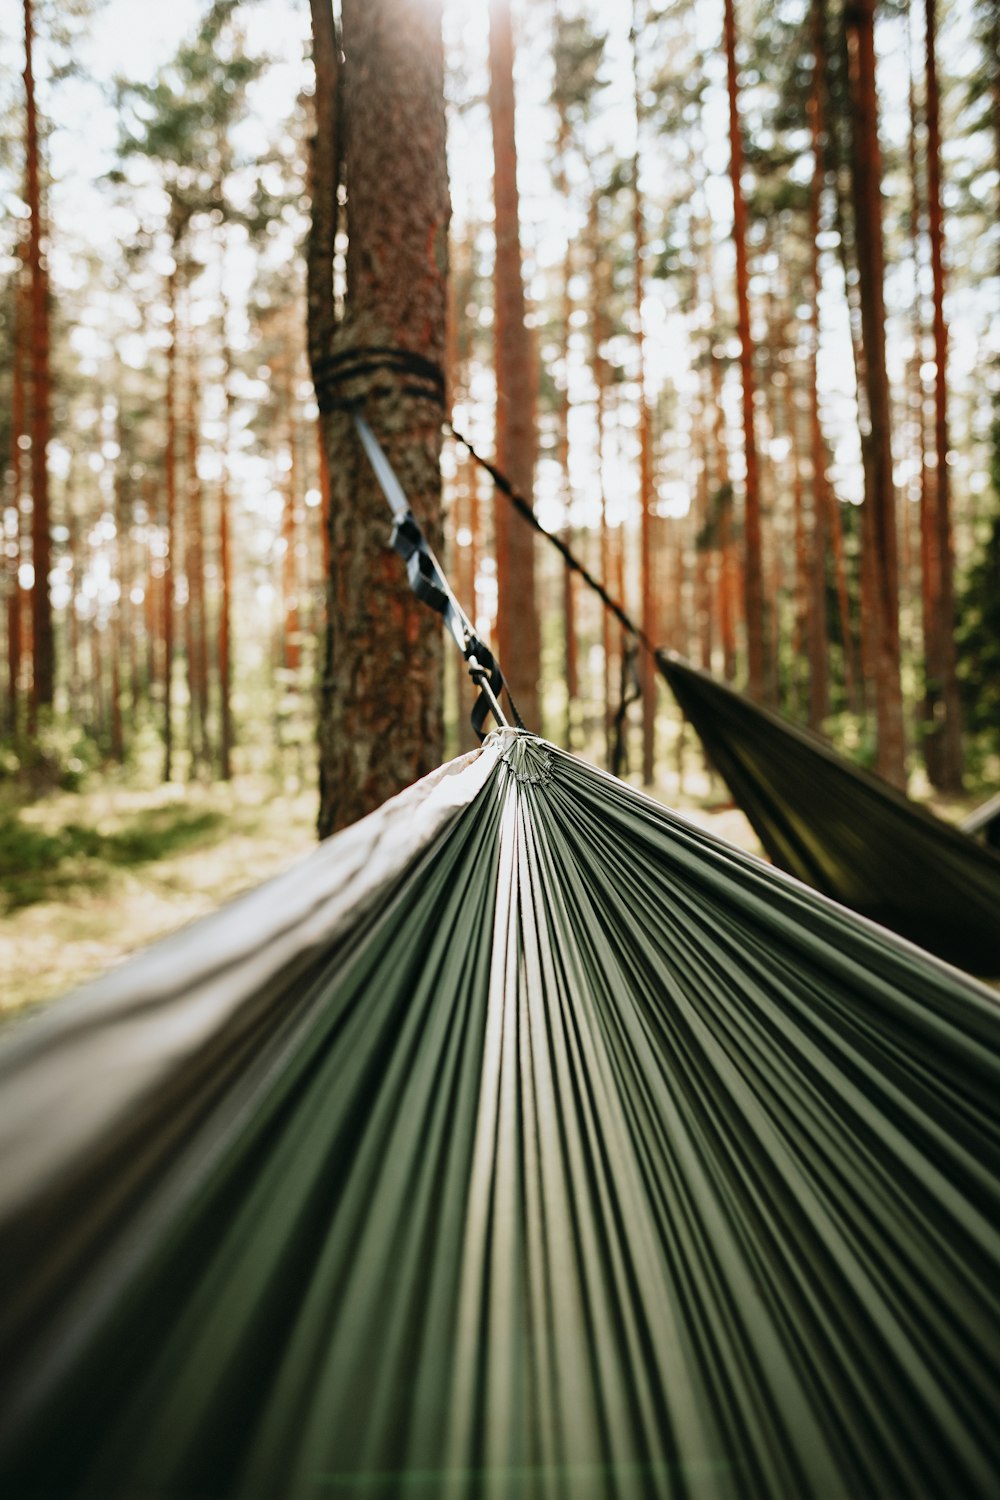 grey hammock between trees during daytime